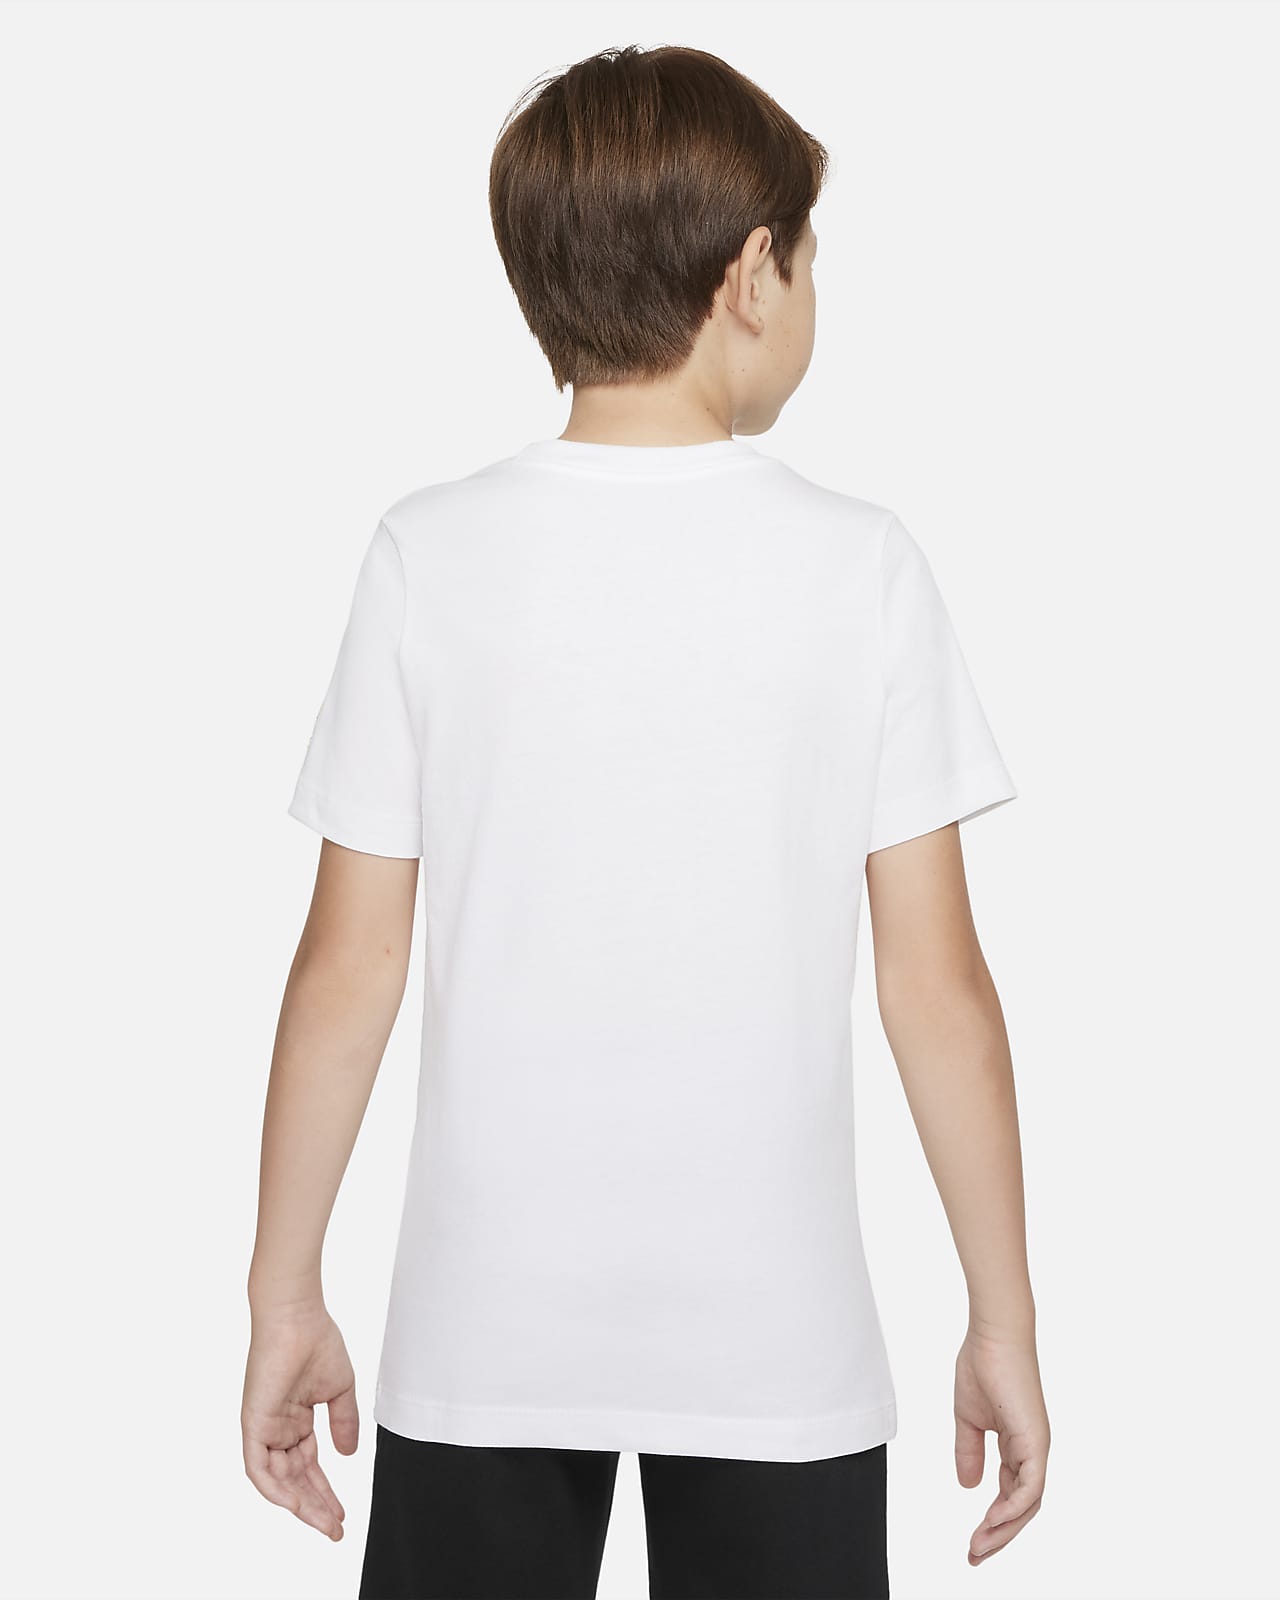 Nike Sportswear Older Kids' T-Shirt. Nike SG